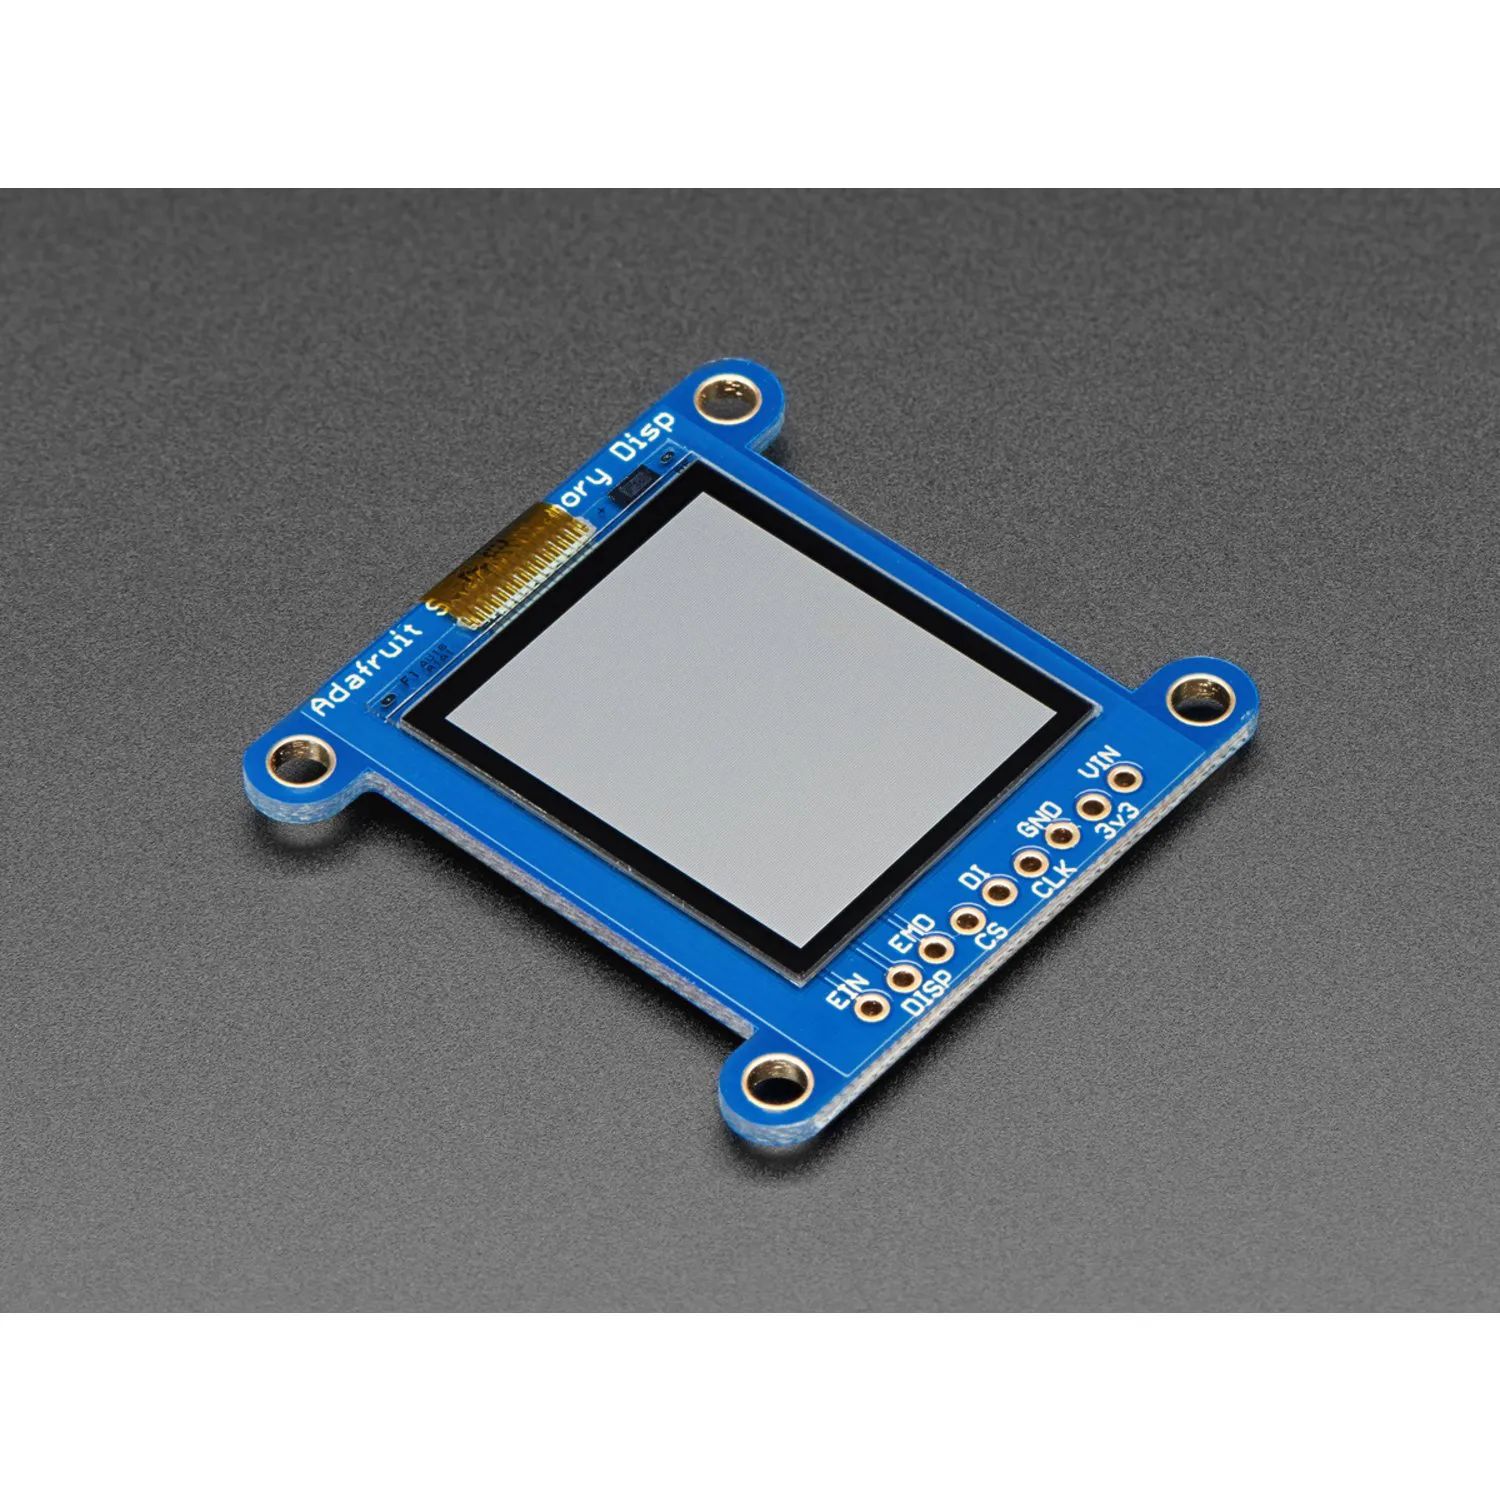 Photo of Adafruit SHARP Memory Display Breakout - 1.3 168x144 Monochrome